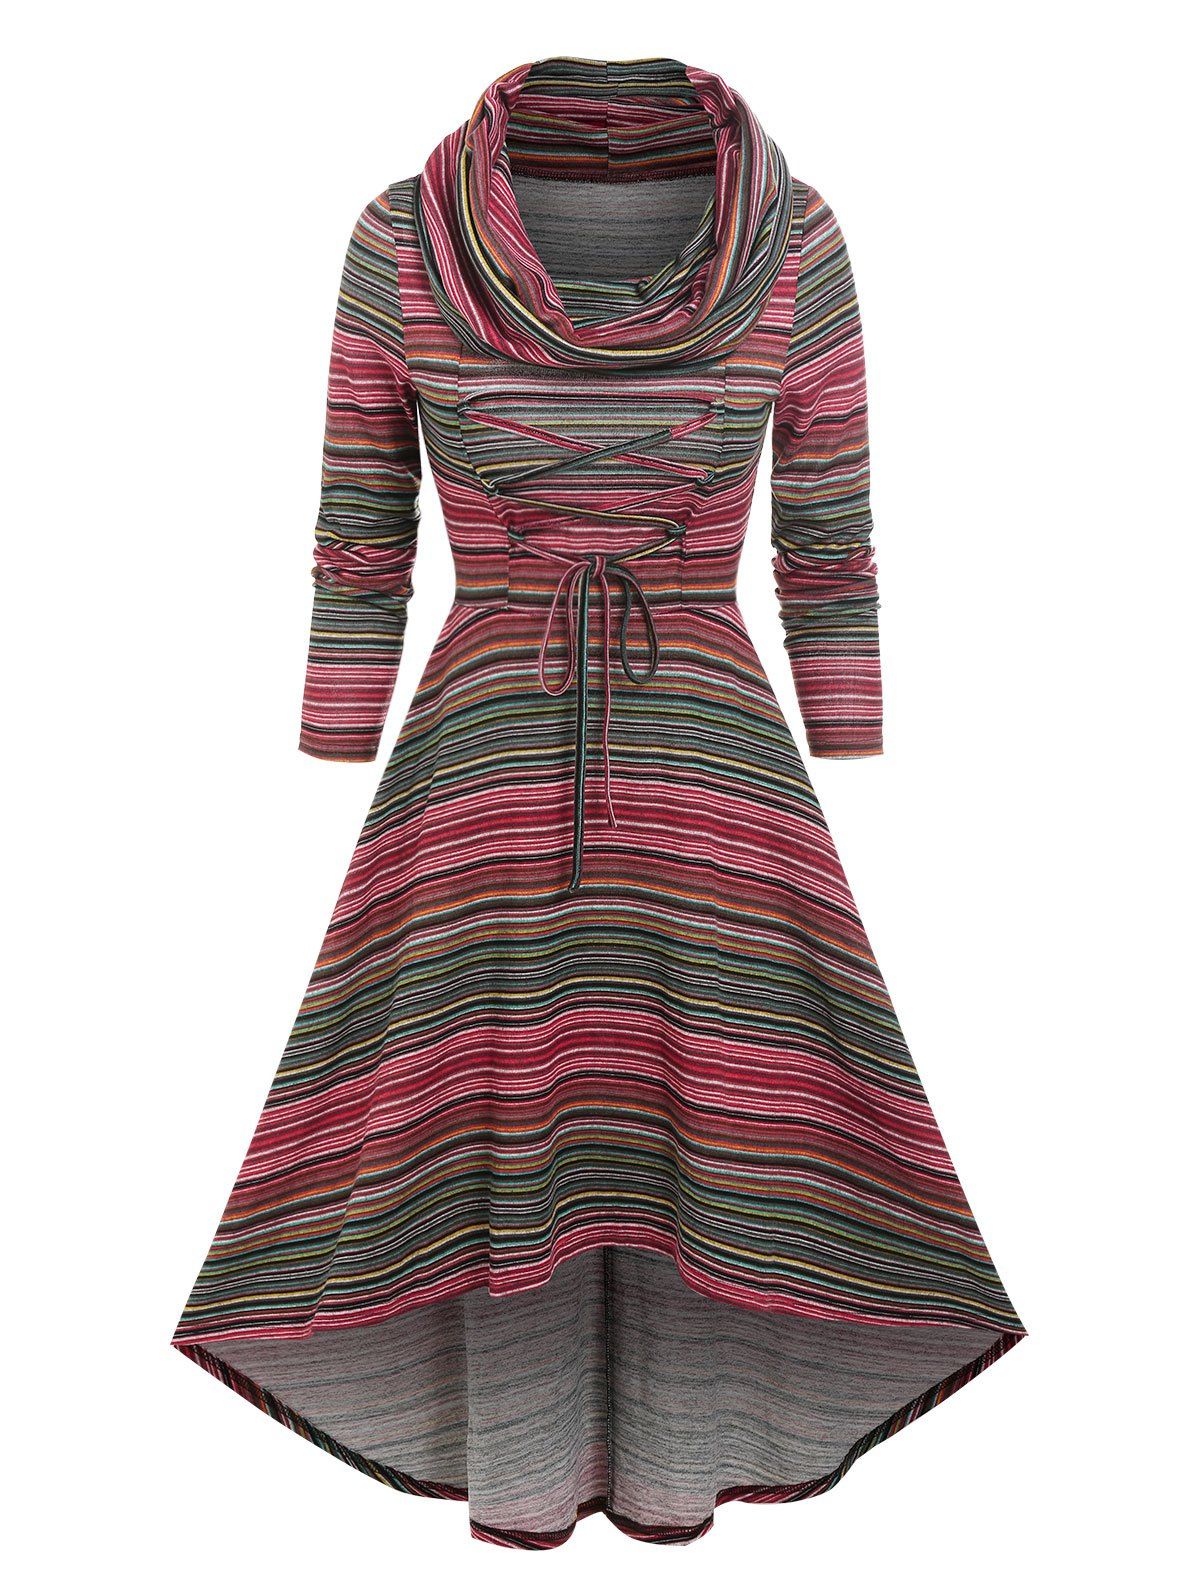 Lace Up Colorful Stripe Cowl Neck High Low Dress - multicolor XL